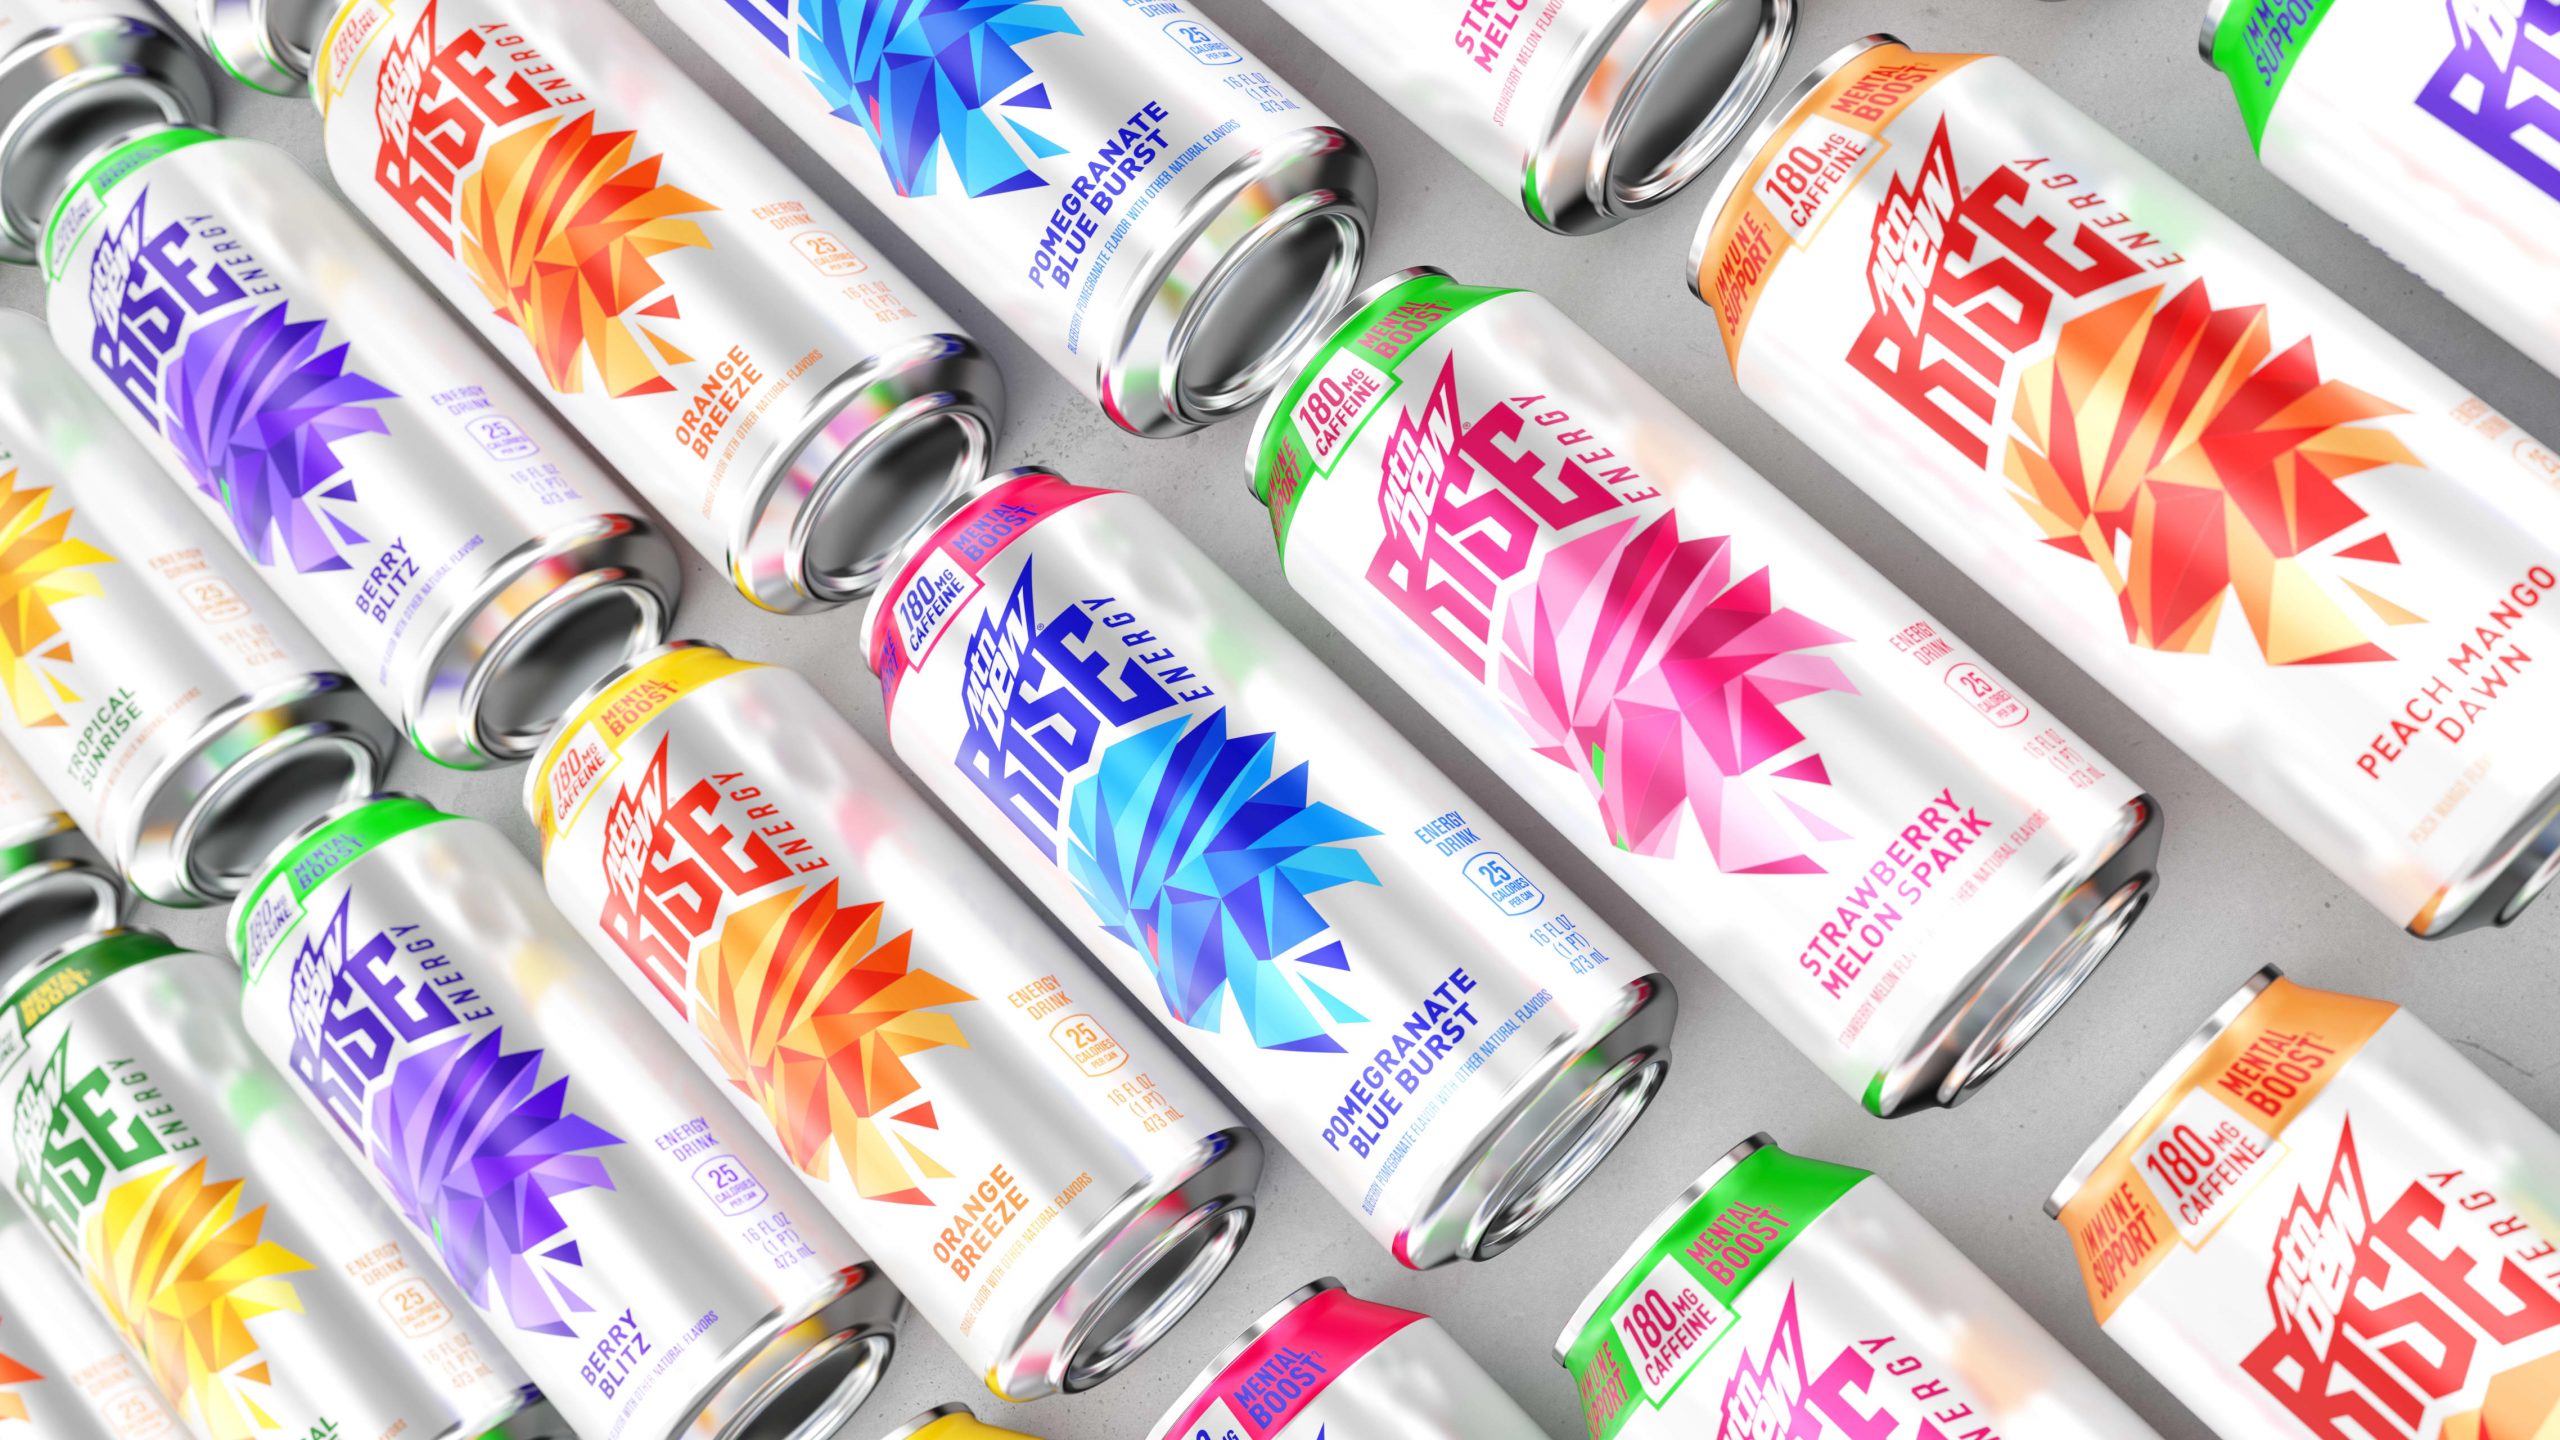 Pepsico Unveils New Line Of Mountain Dew Energy Drinks With Lebron James’ Endorsement photo